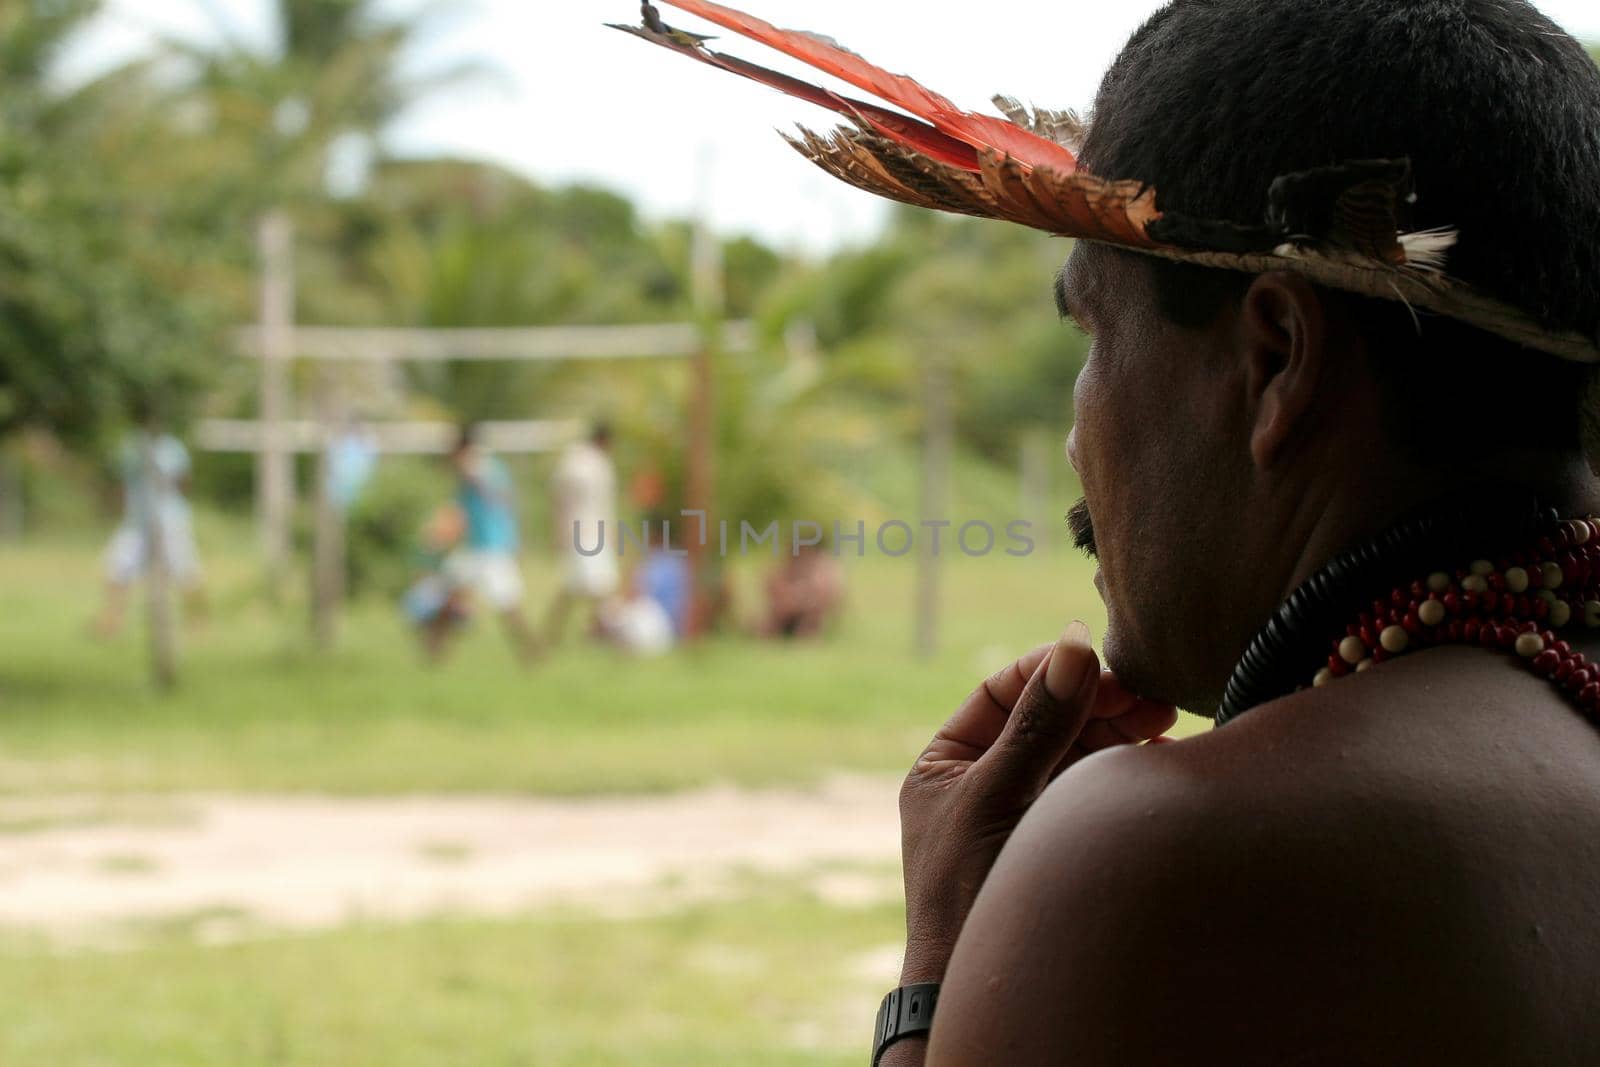 porto seguro, bahia, brazil - april 13, 2009: Indians of the Pataxo ethnicity are seen in the Barra Velha Indian village in the municipality of Porto Seguro.